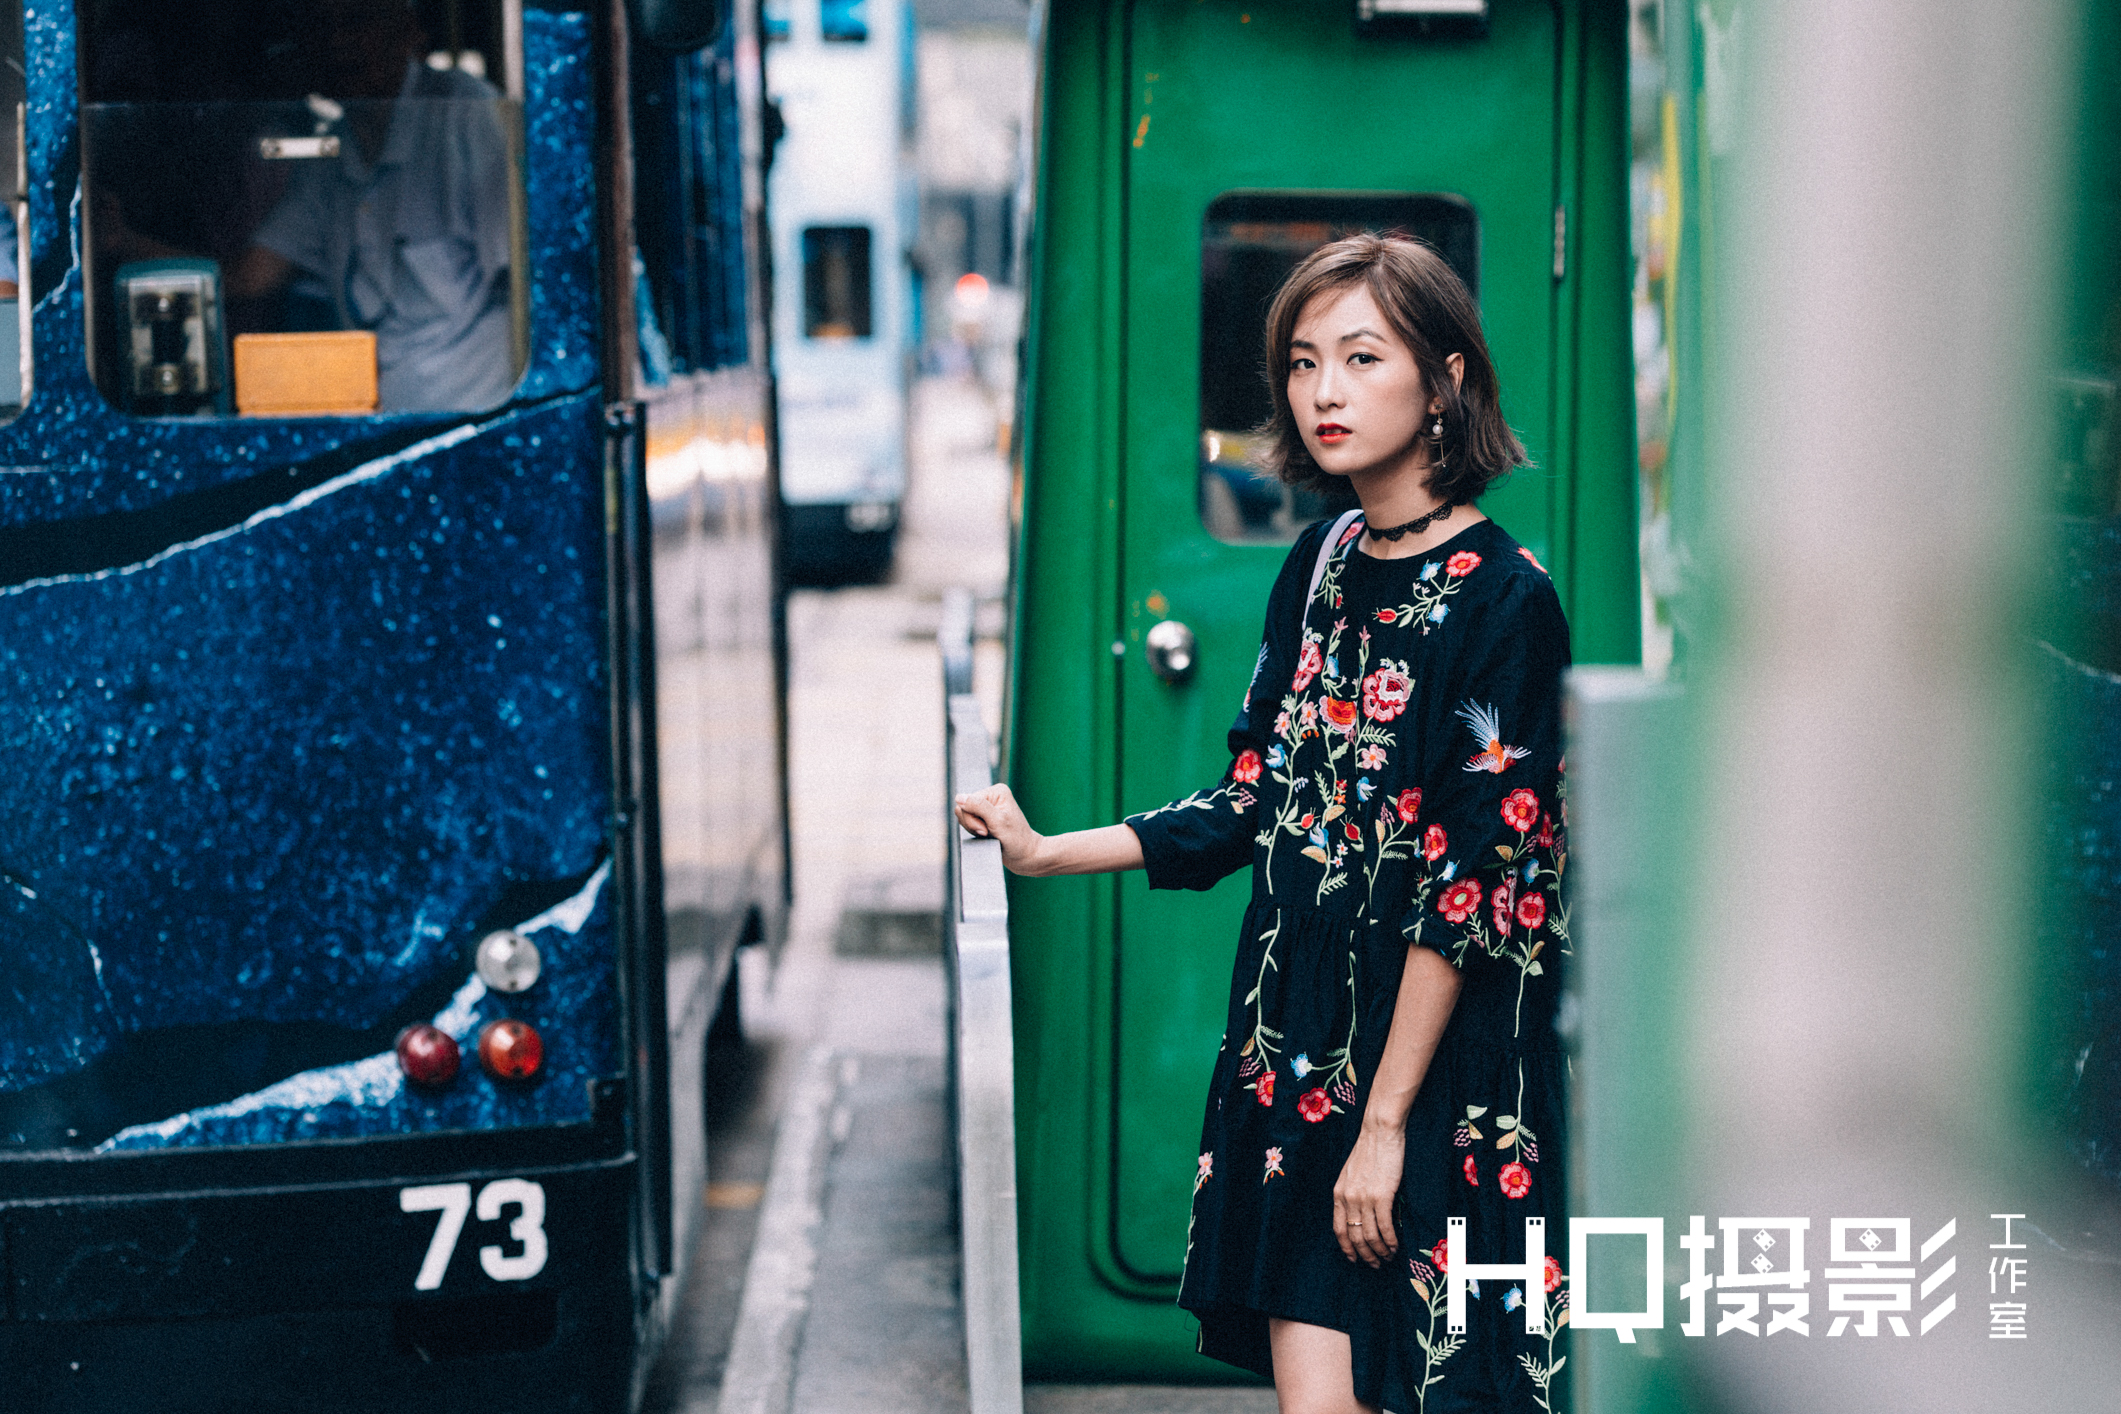 Matt HC Leung之攝影師紀錄: 上環電車人像拍攝